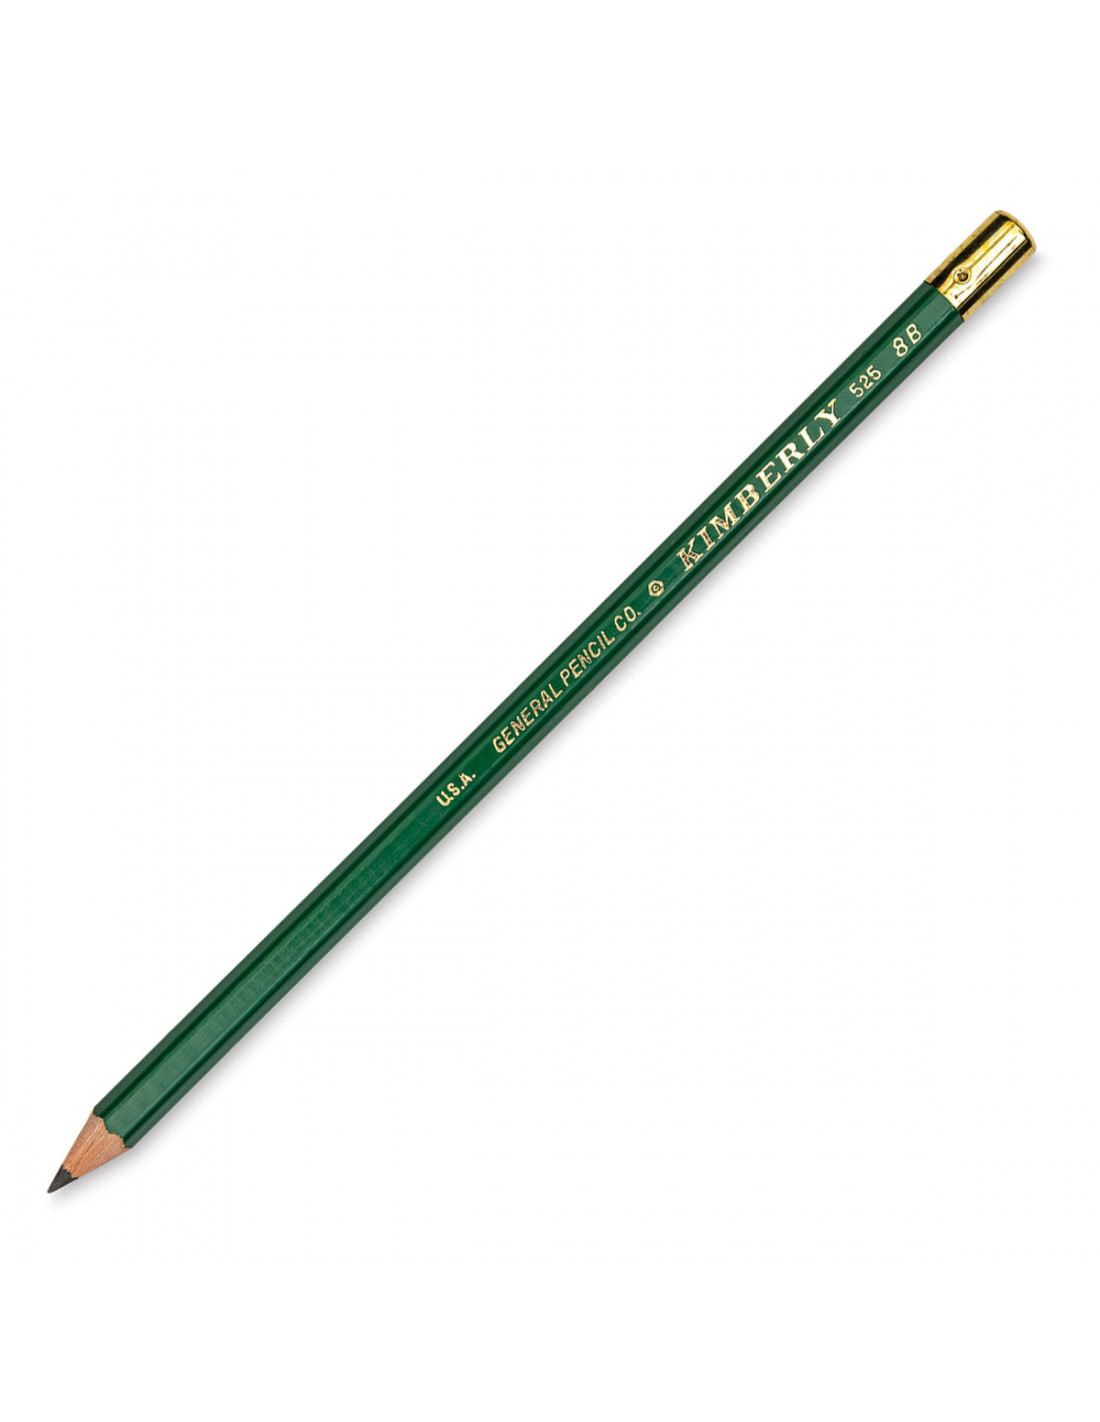 8B Graphite Pencil - Kimberly 525 - General Pencil Company